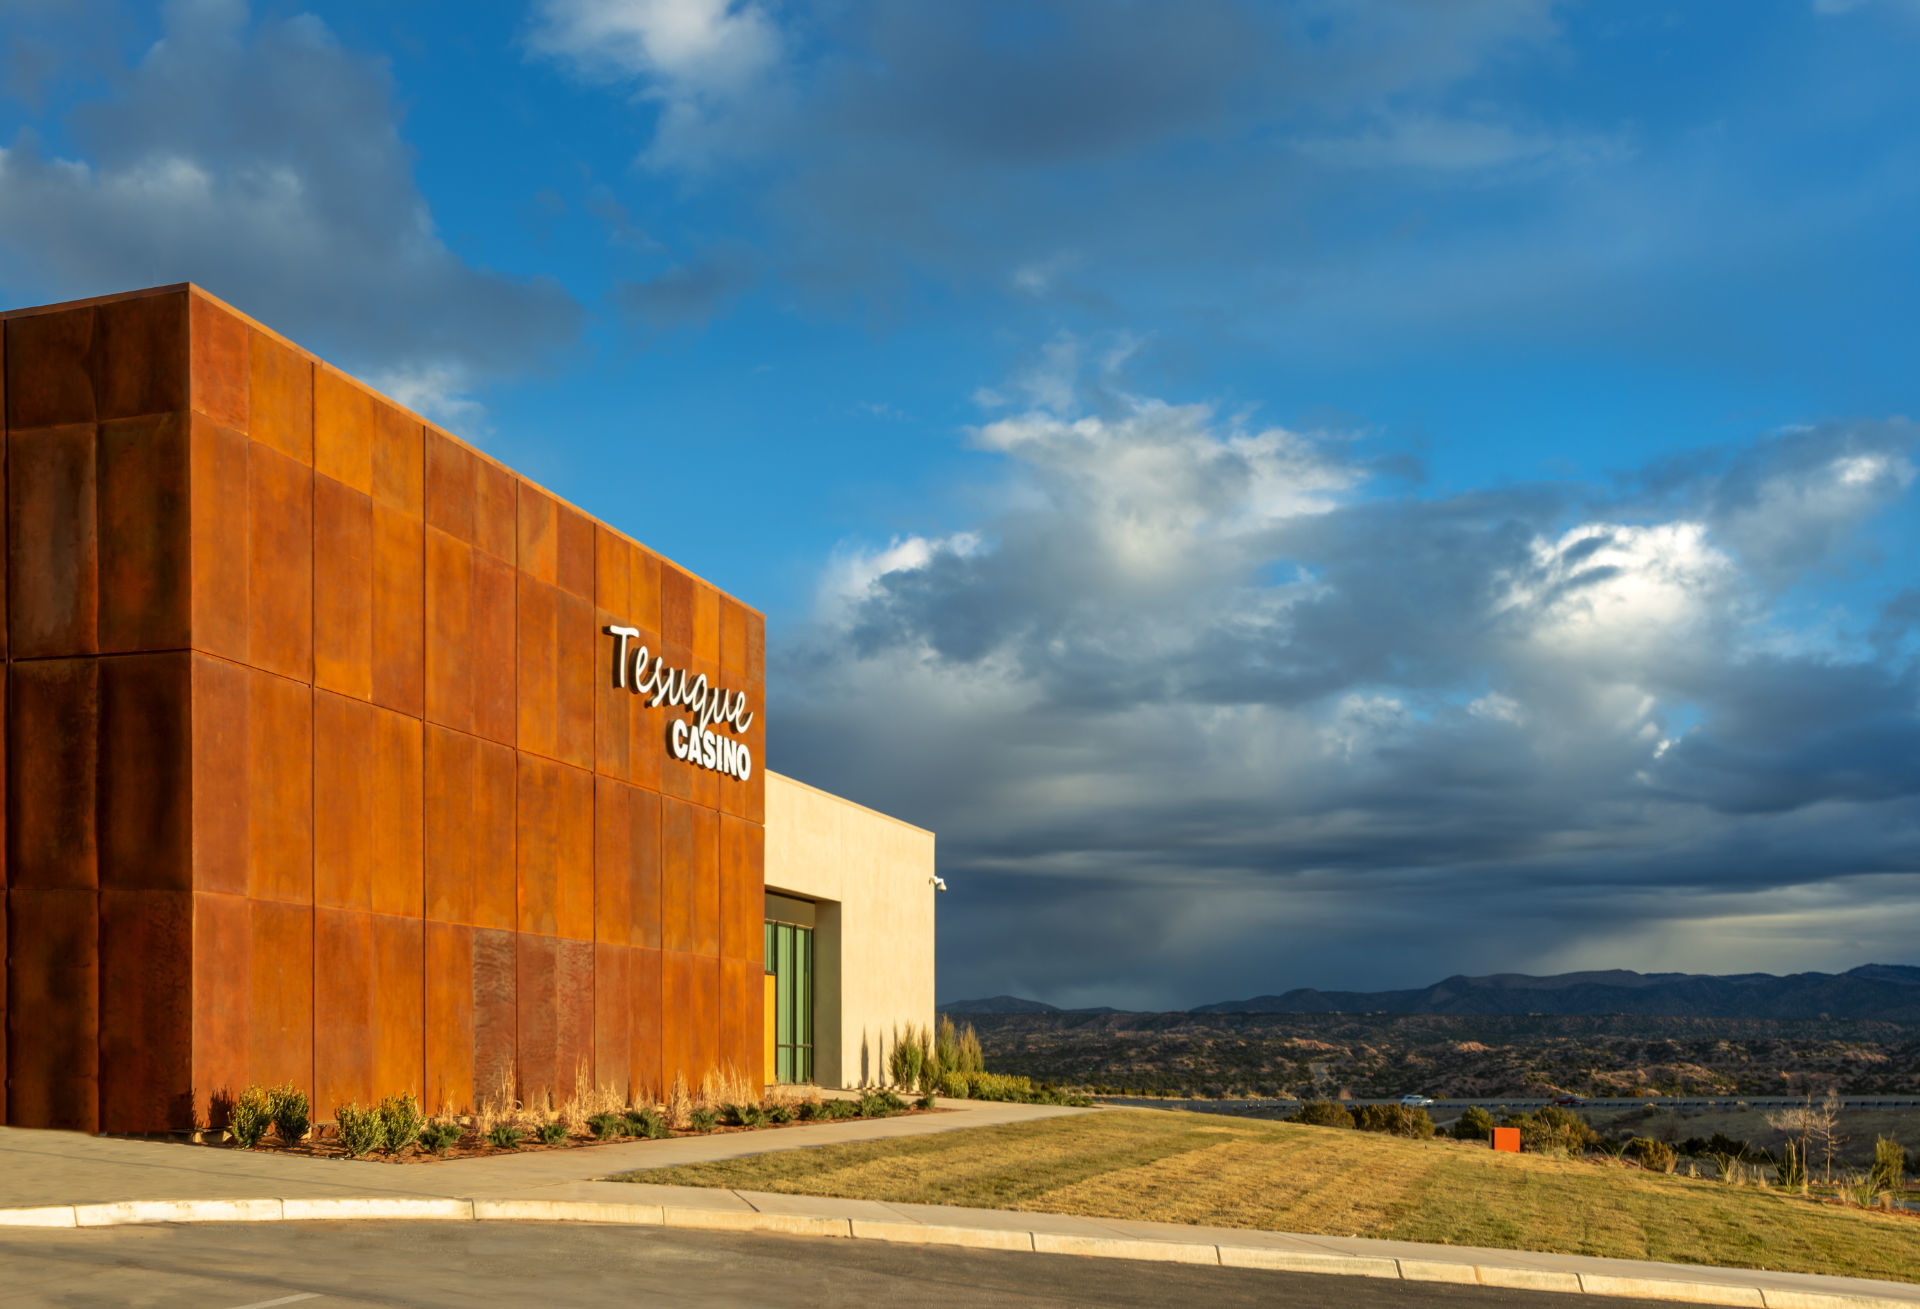 Photo of Tesuque Casino, Santa Fe, NM